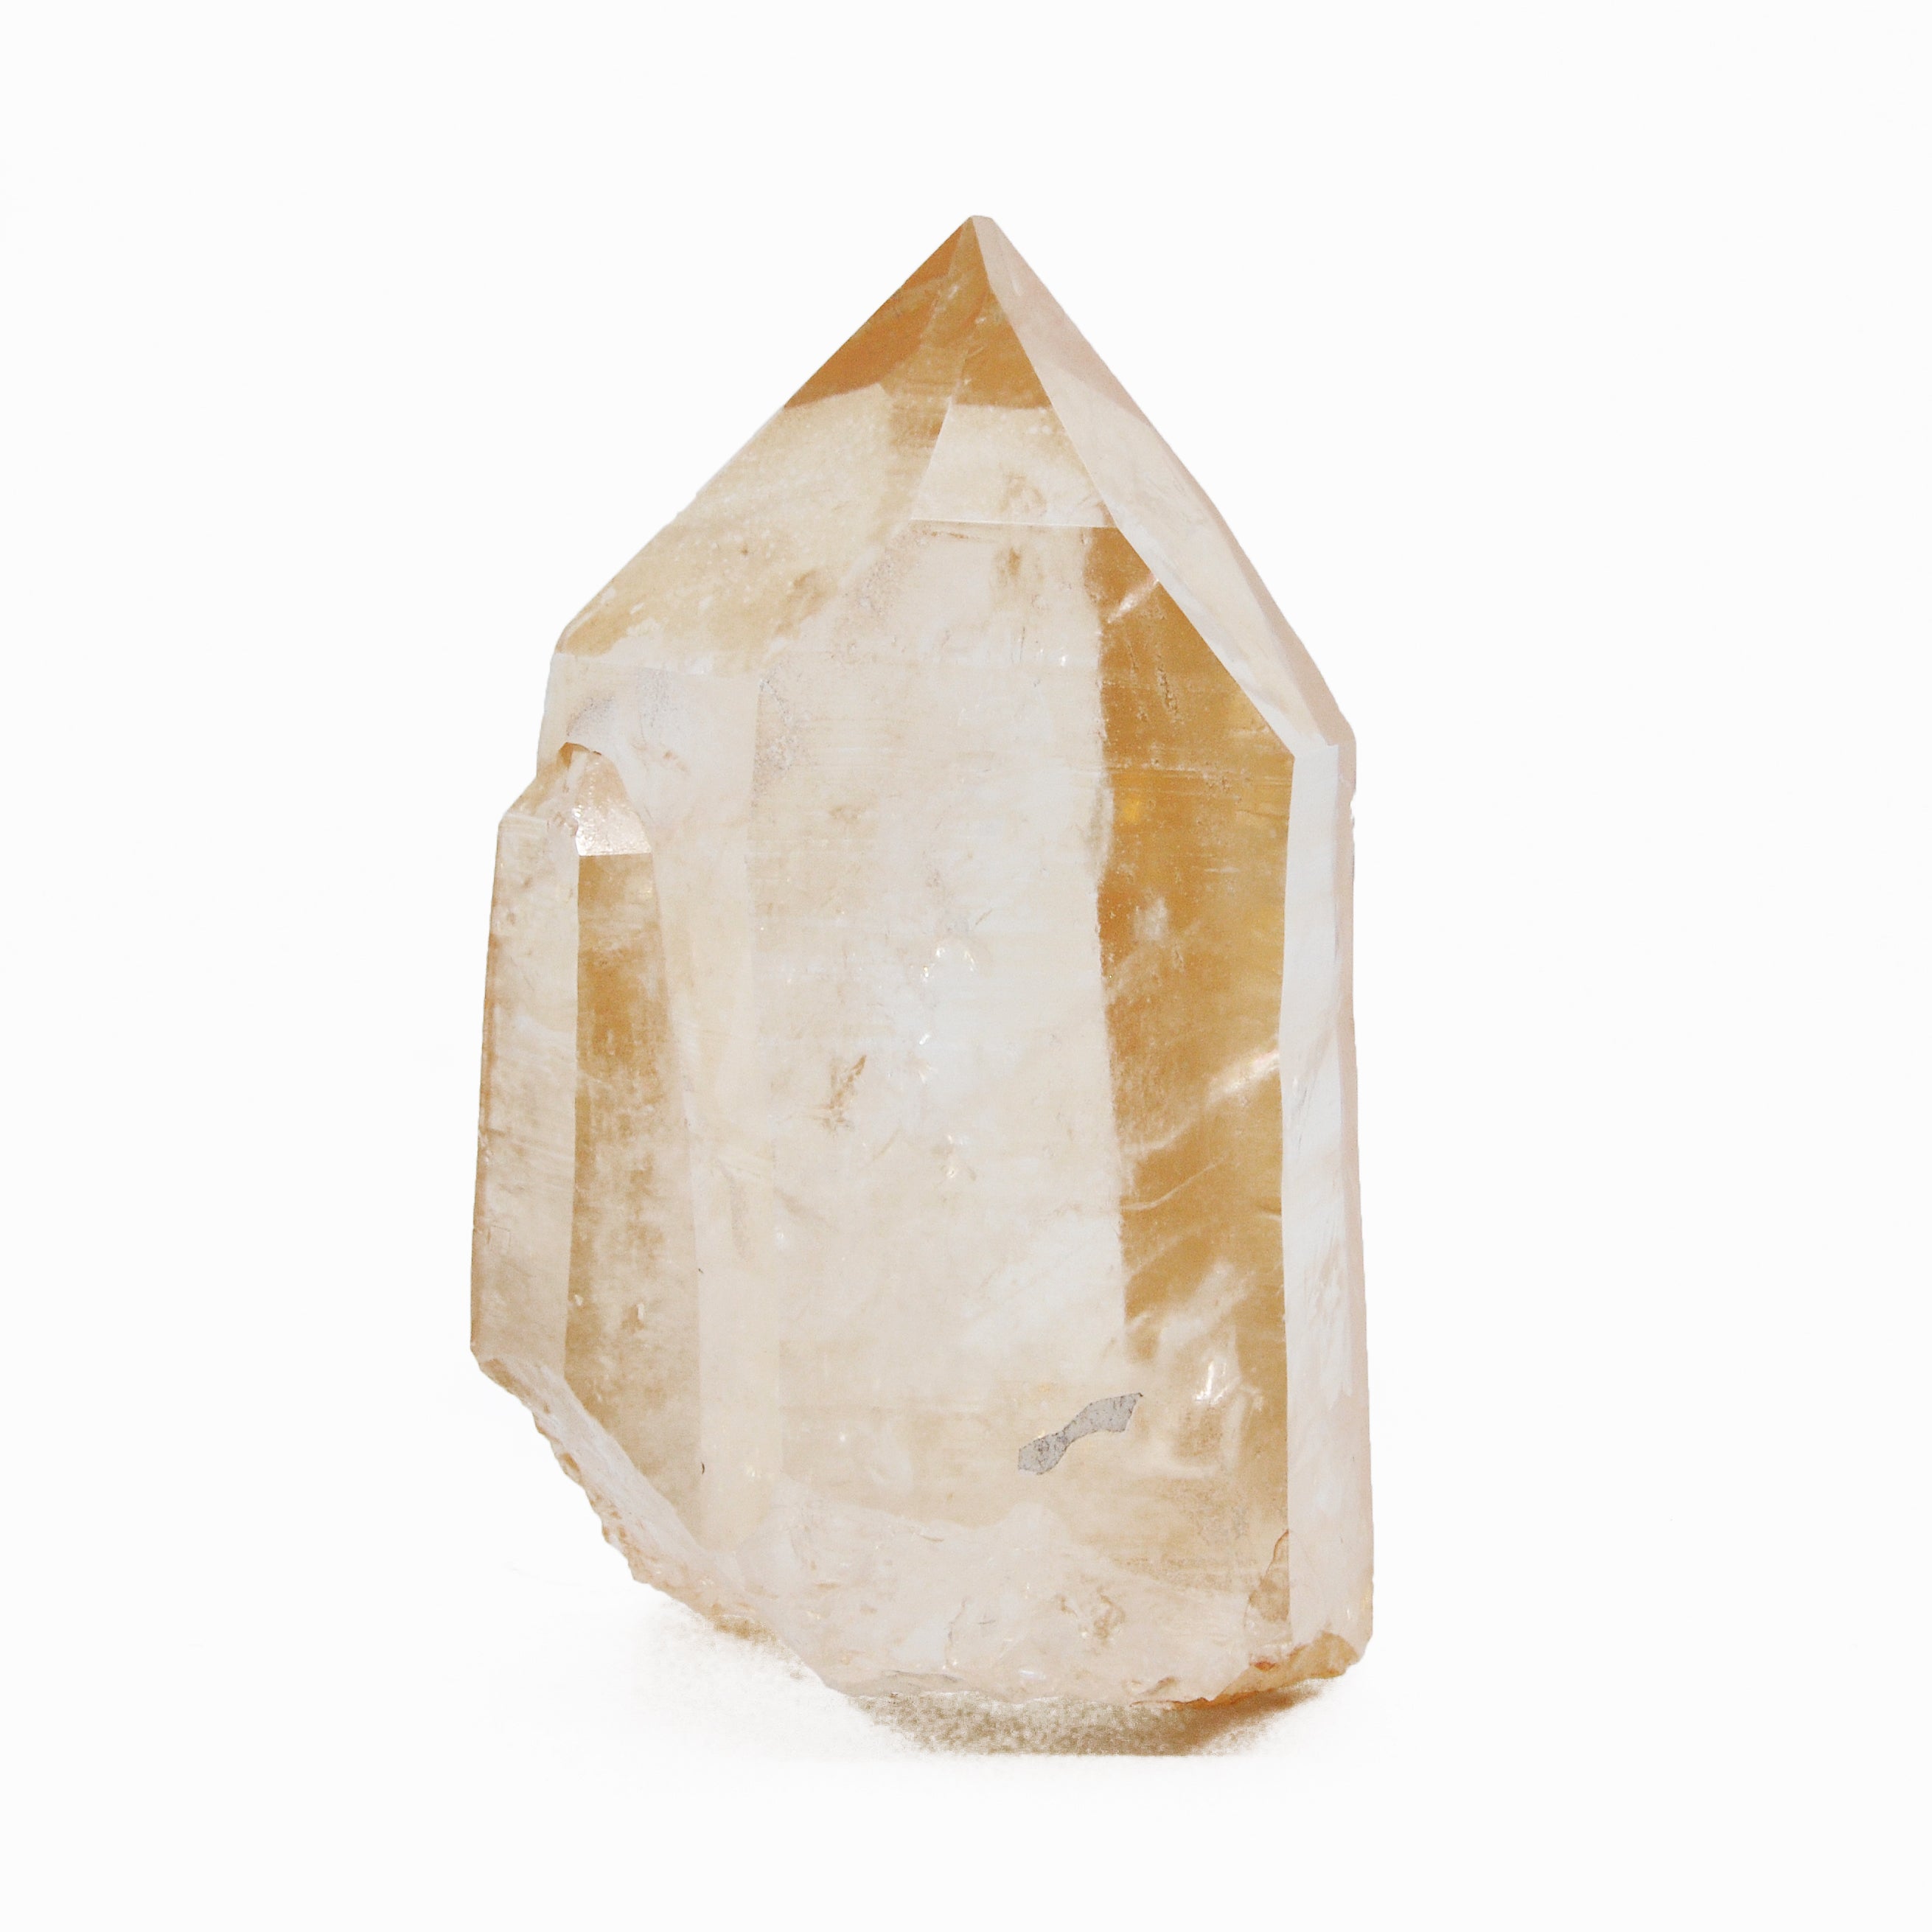 Tangerine Quartz 4.8 inch 1.58lb Natural Crystal Point - Sapo Mine, Brazil - XX-566 - Crystalarium